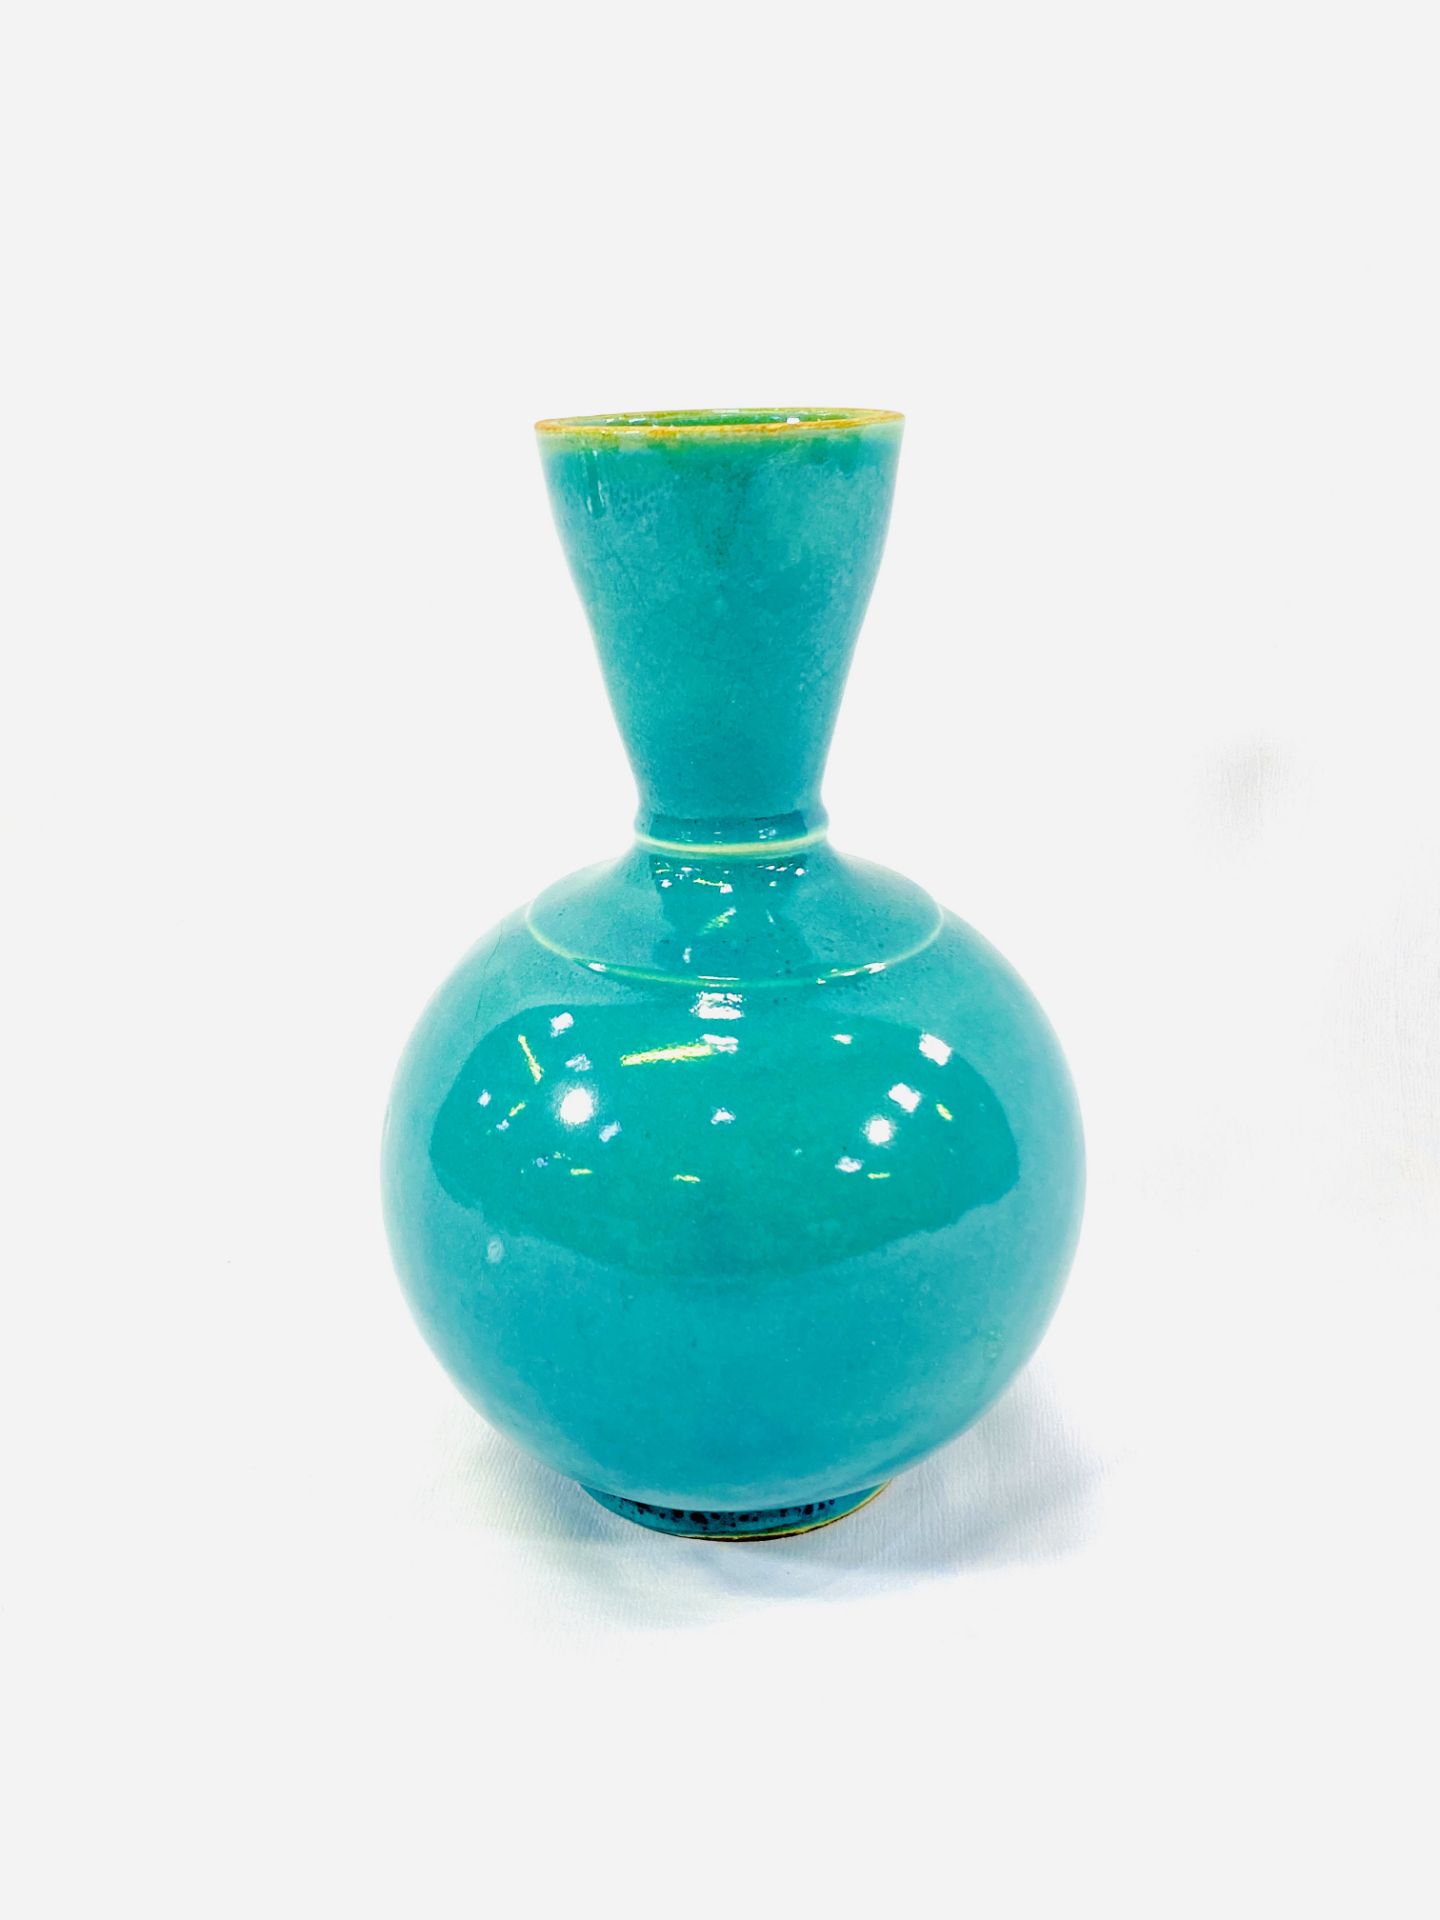 Oriental turquoise vase - Image 4 of 5